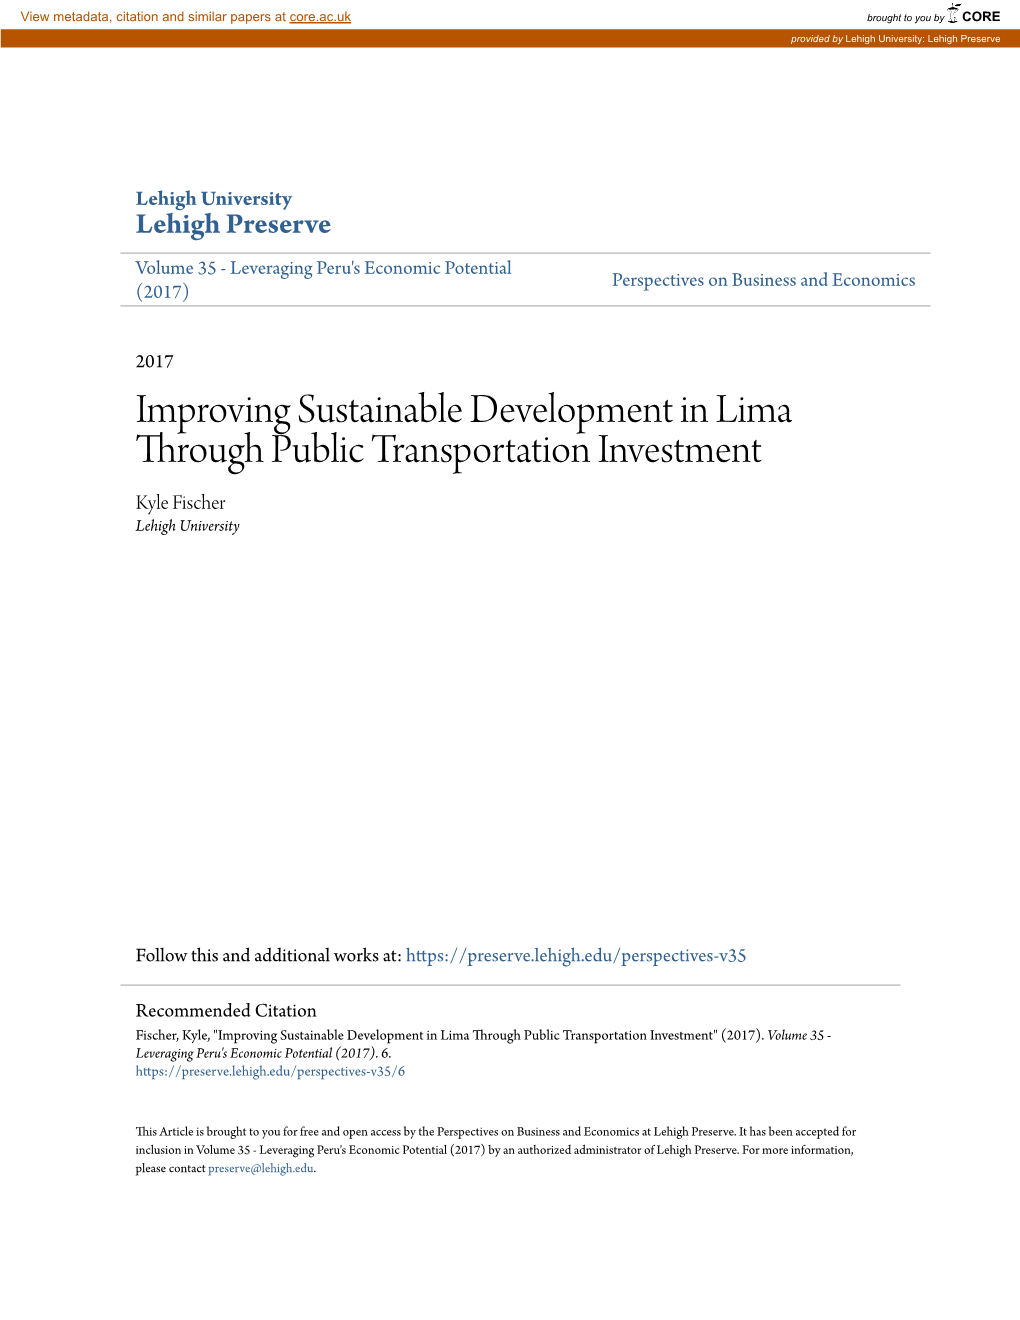 Improving Sustainable Development in Lima Through Public Transportation Investment Kyle Fischer Lehigh University